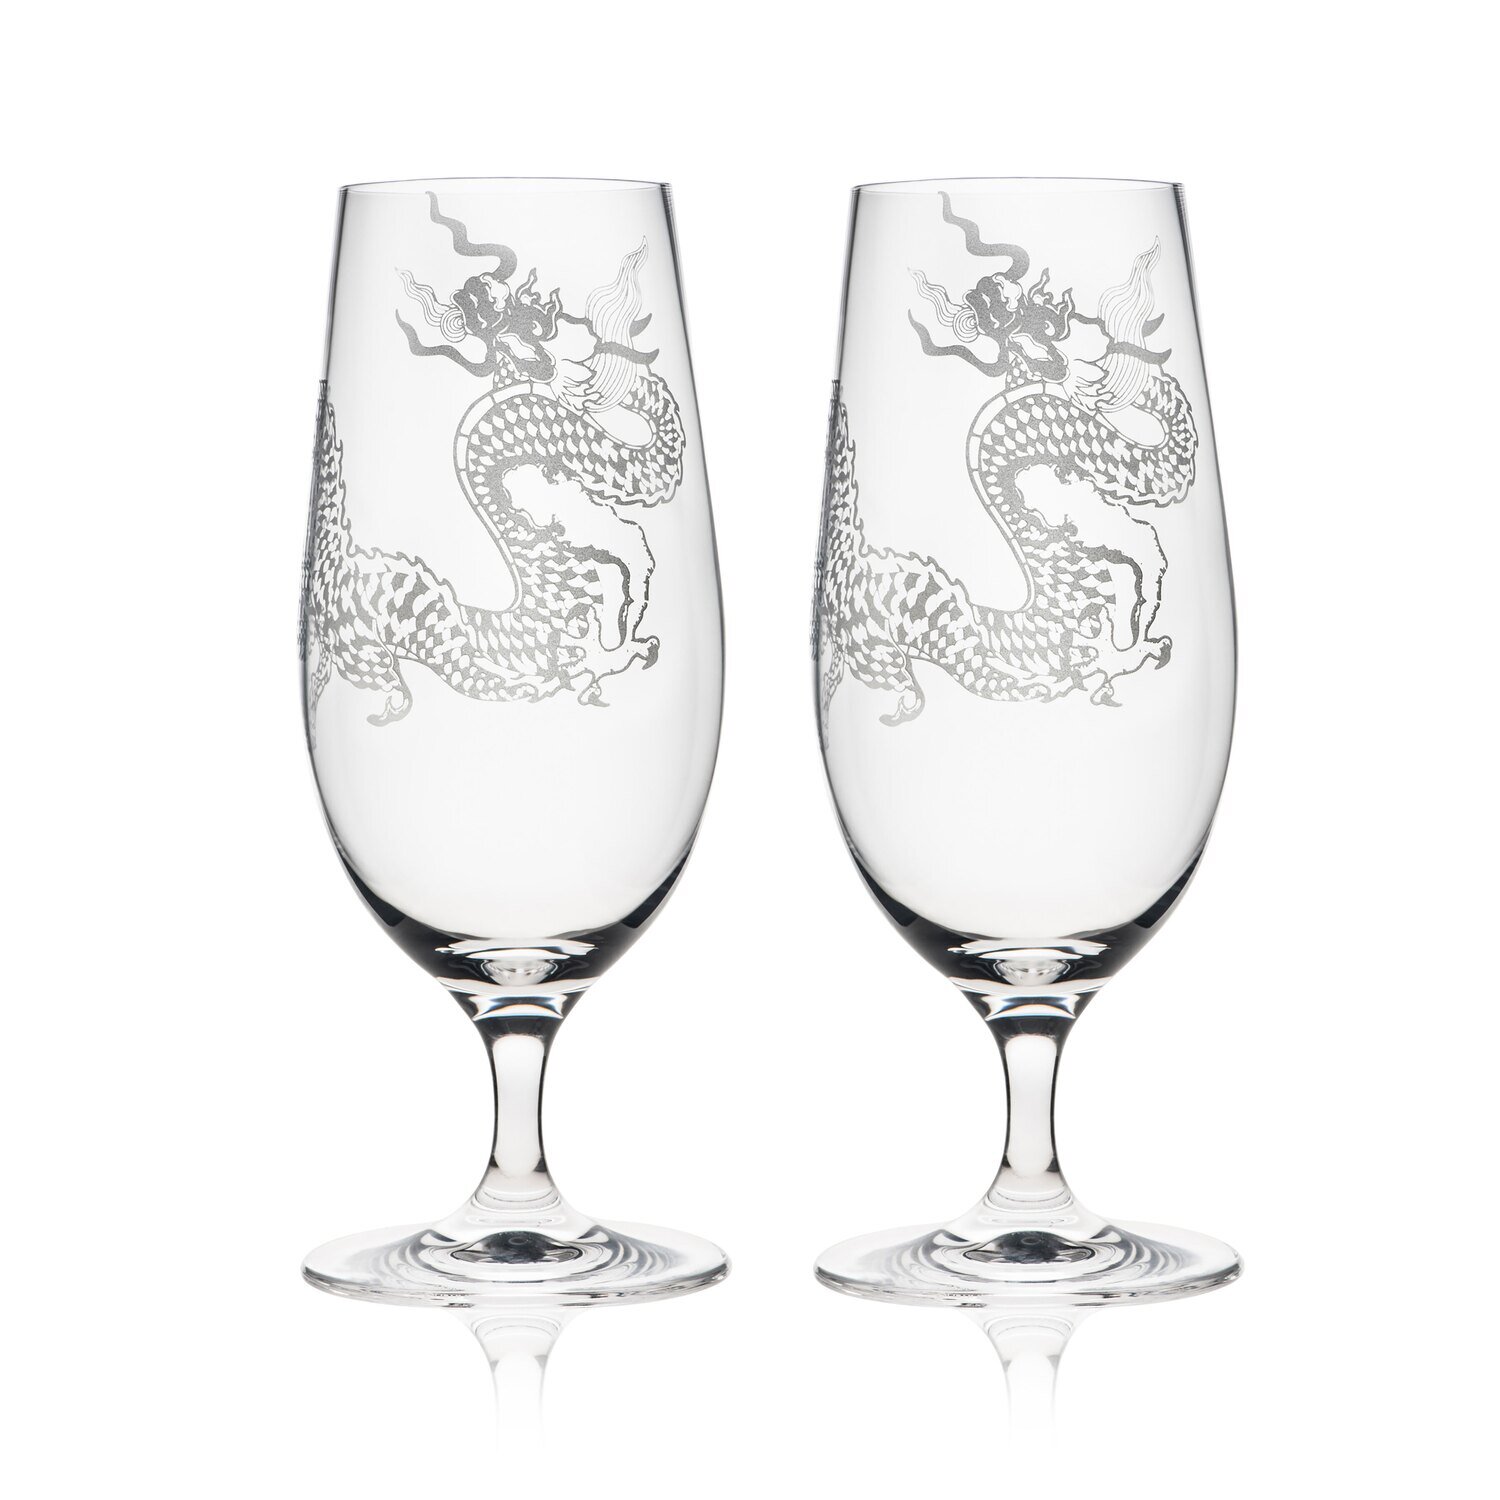 Caskata Dragon Beer Glasses Set of 2 GL-BEER-381